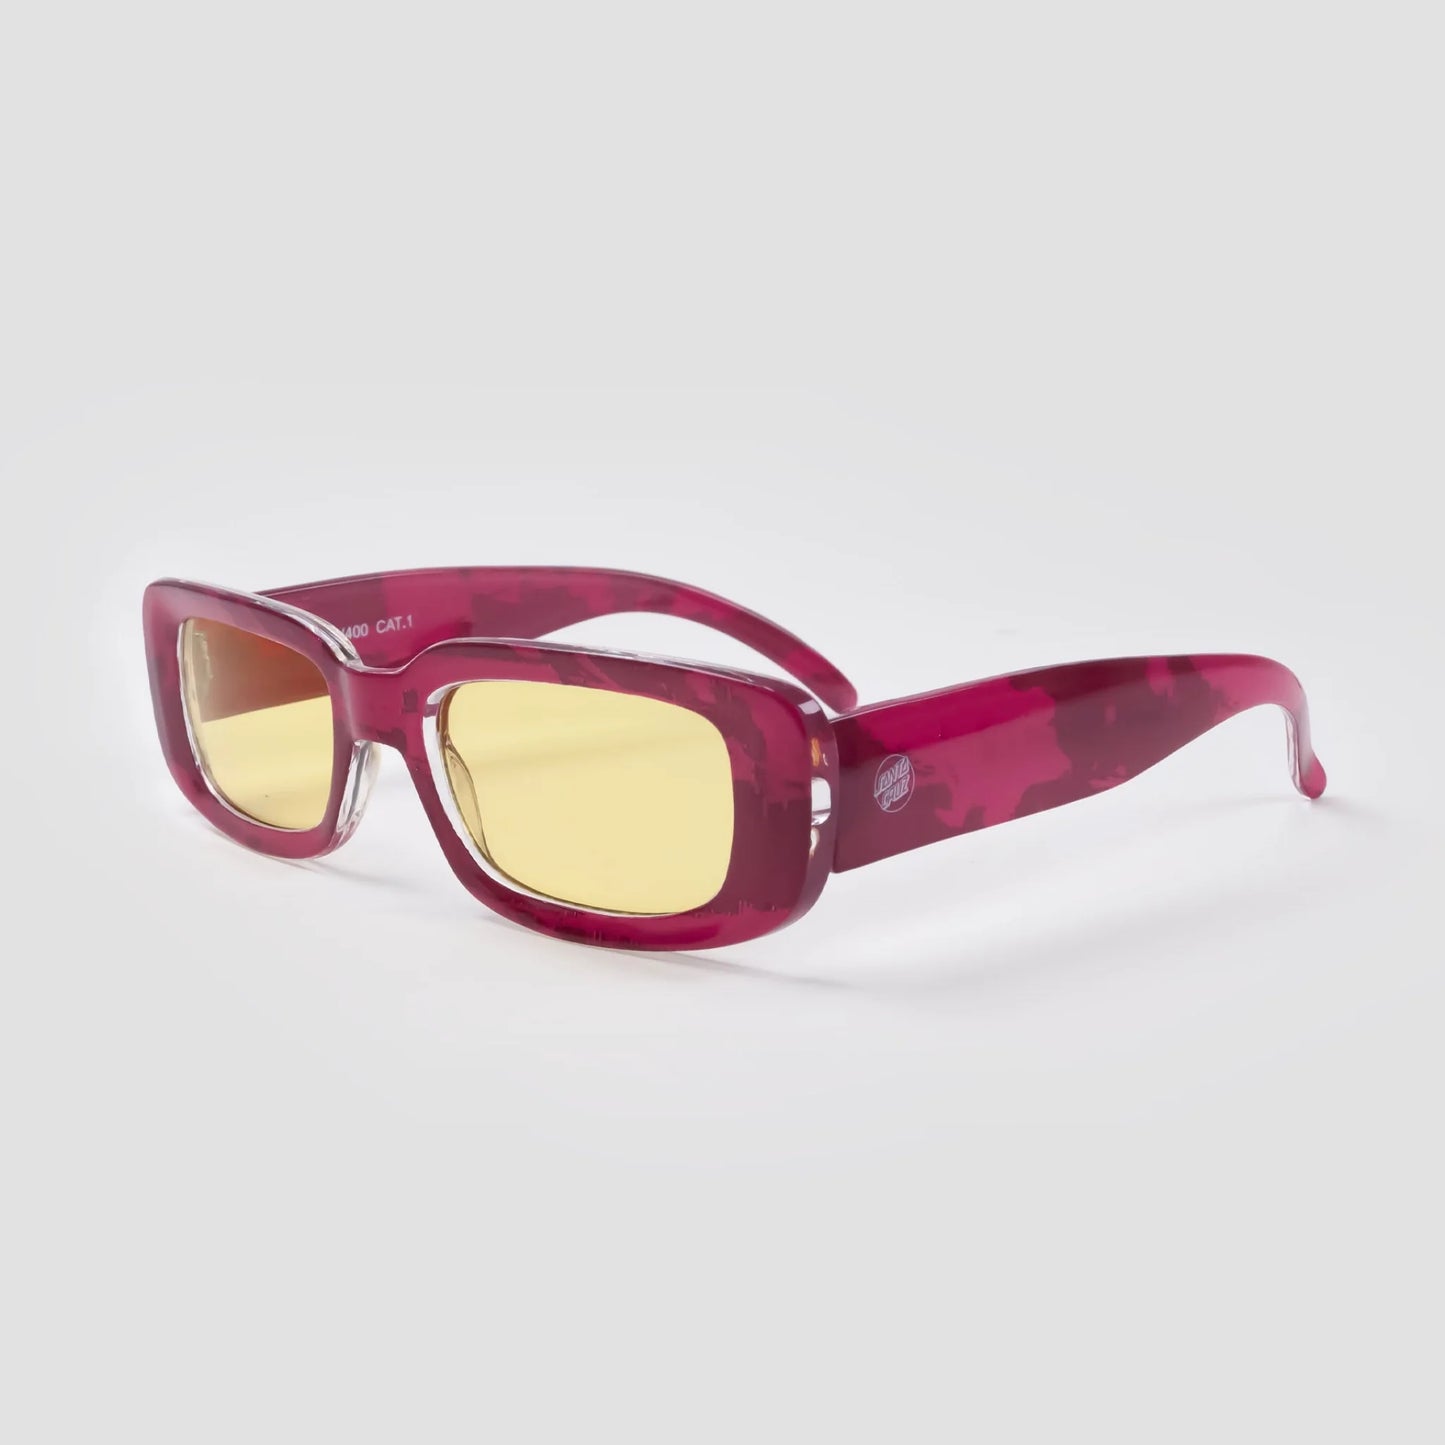 Santa Cruz Crash Sunglasses - Port - Prime Delux Store